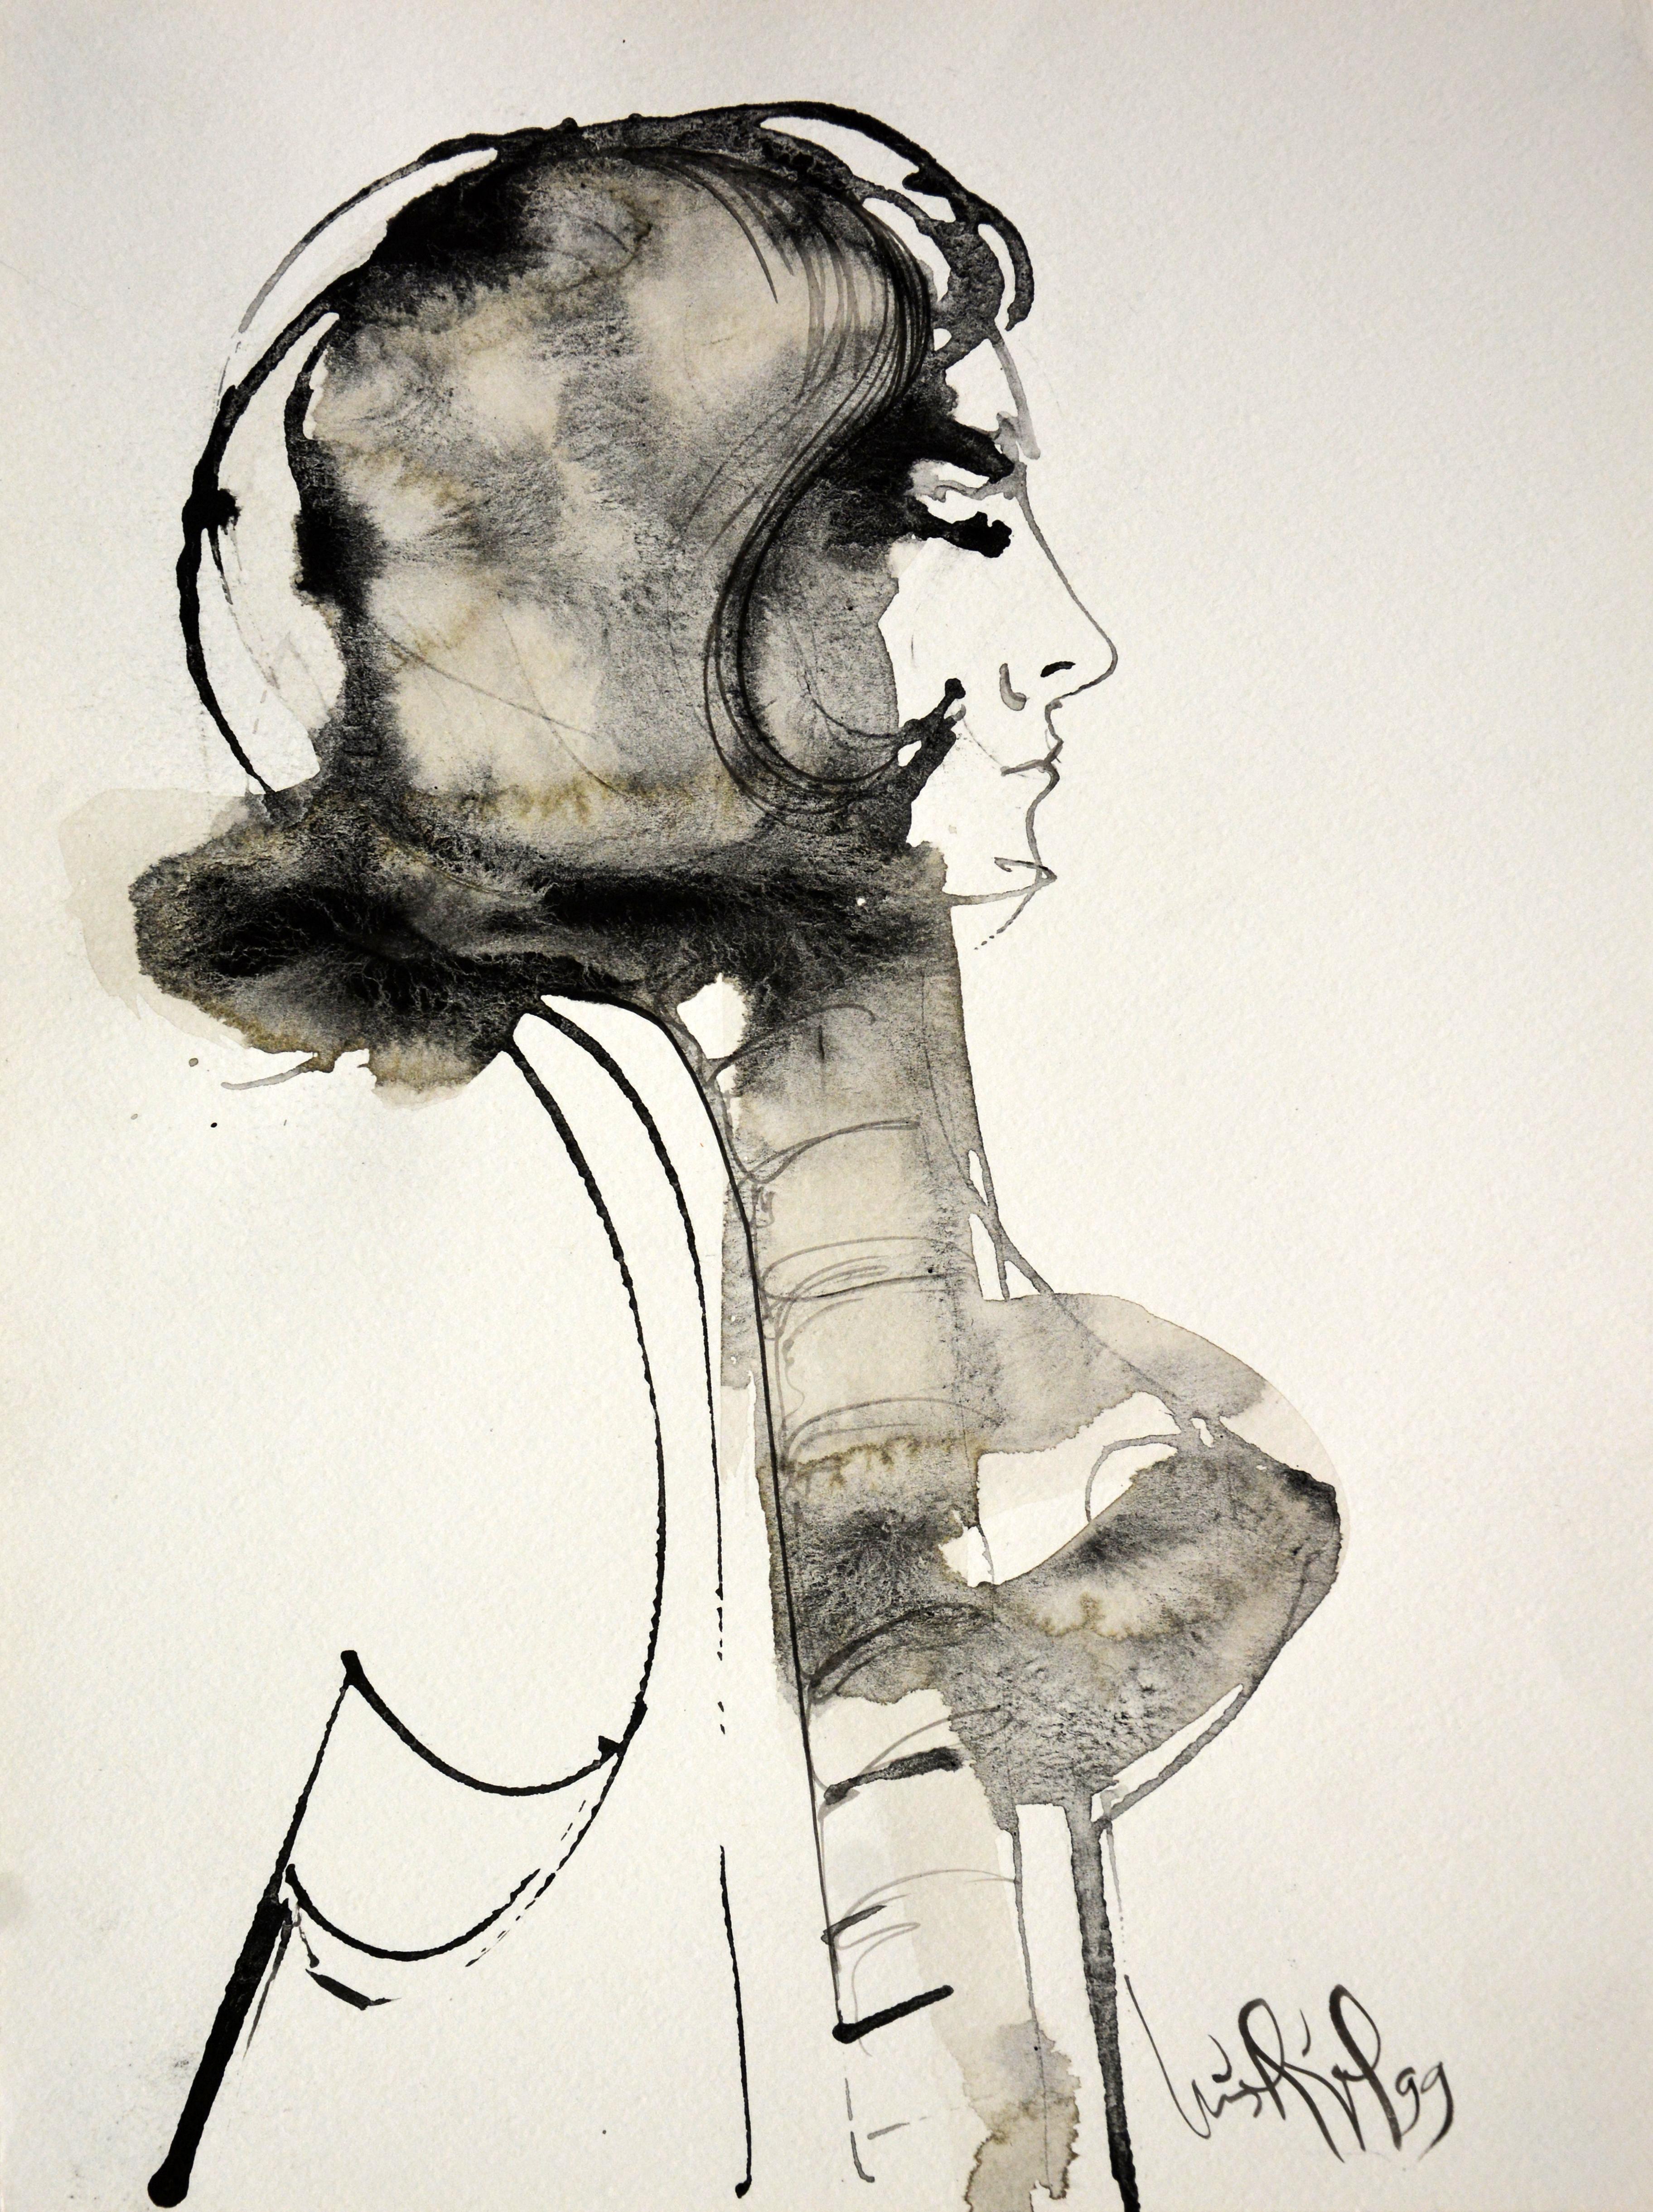 Luis Miguel Valdes, ¨Perfil-2¨, 1999, Work on paper, 15.7x11.8 in - Art by Luis Miguel Valdes 